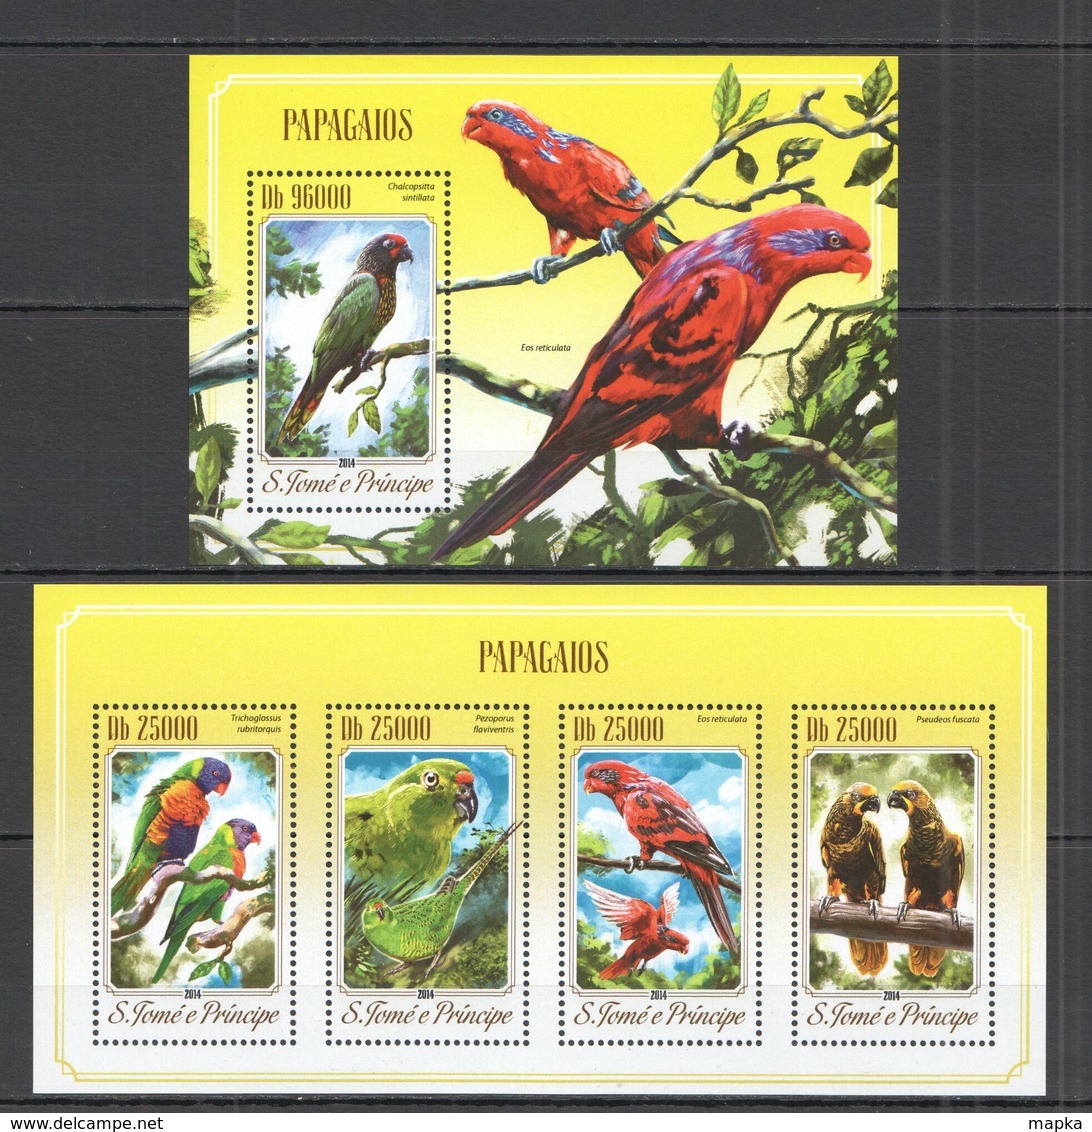 ST1607 2014 S. TOME E PRINCIPE FAUNA BIRDS PARROTS PAPAGAIOS KB+BL MNH - Parrots